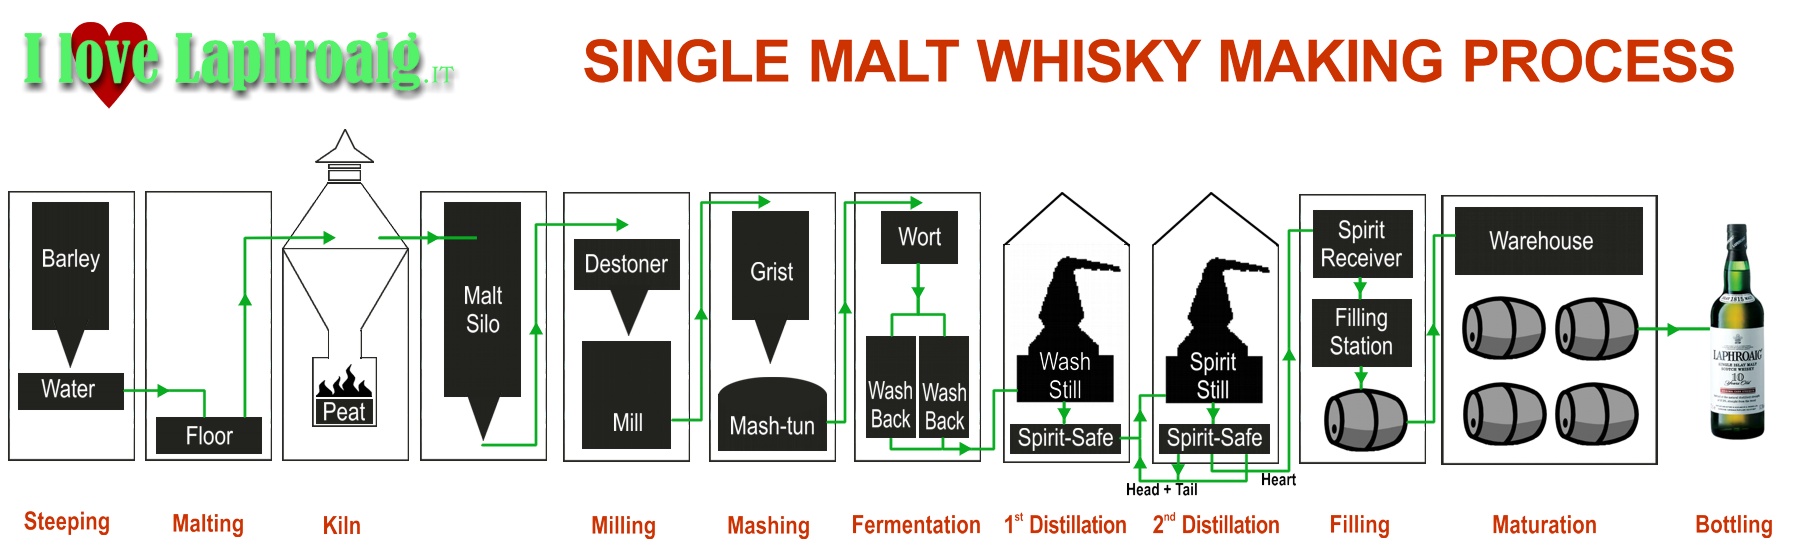 Single Malt Whisky Making Process